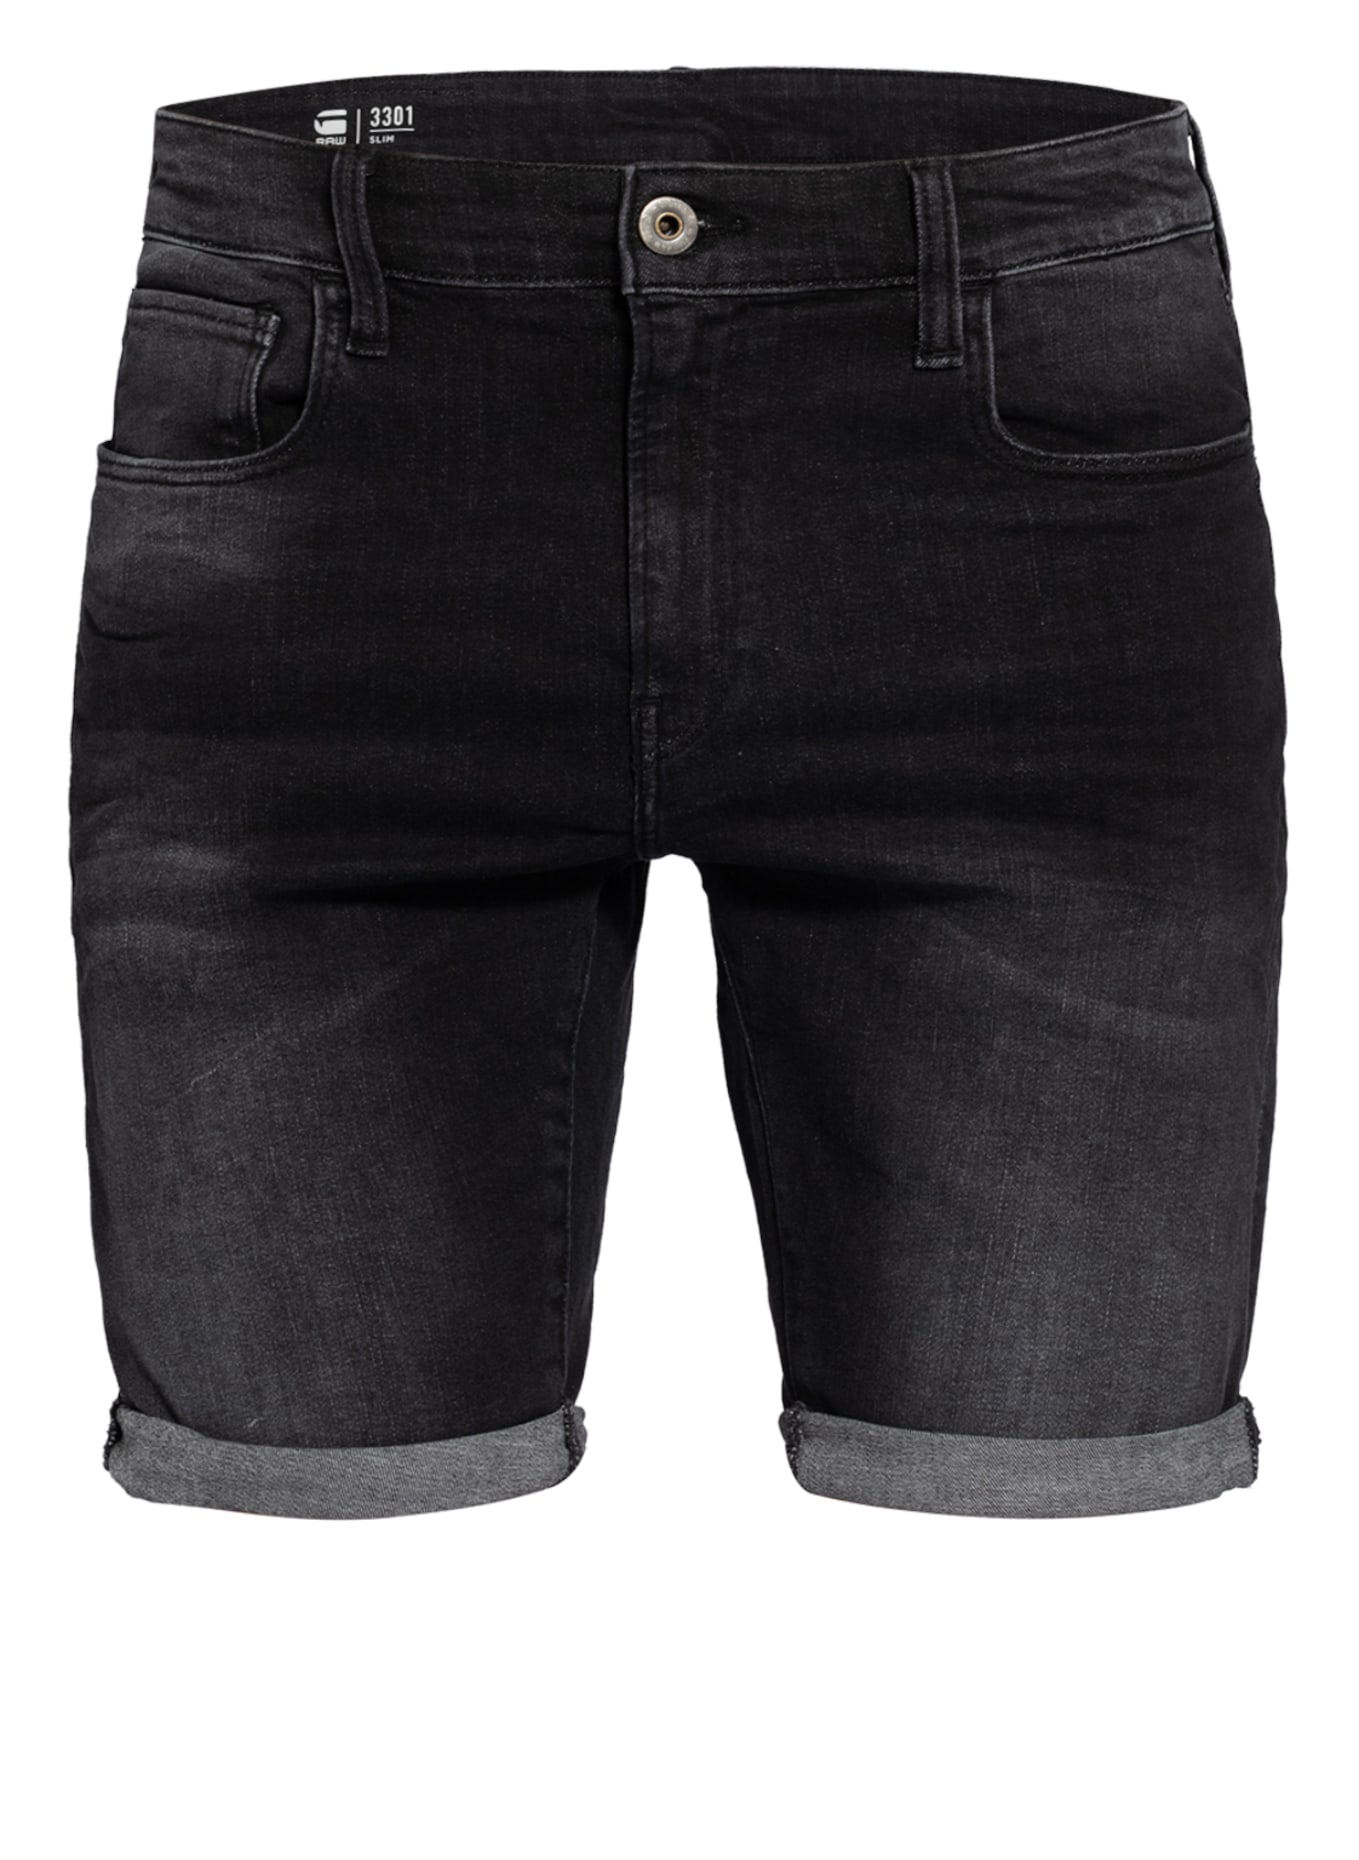 G-Star RAW Jeans-Shorts 3301 Slim Fit, Farbe: 9887 Medium Aged Grey (Bild 1)